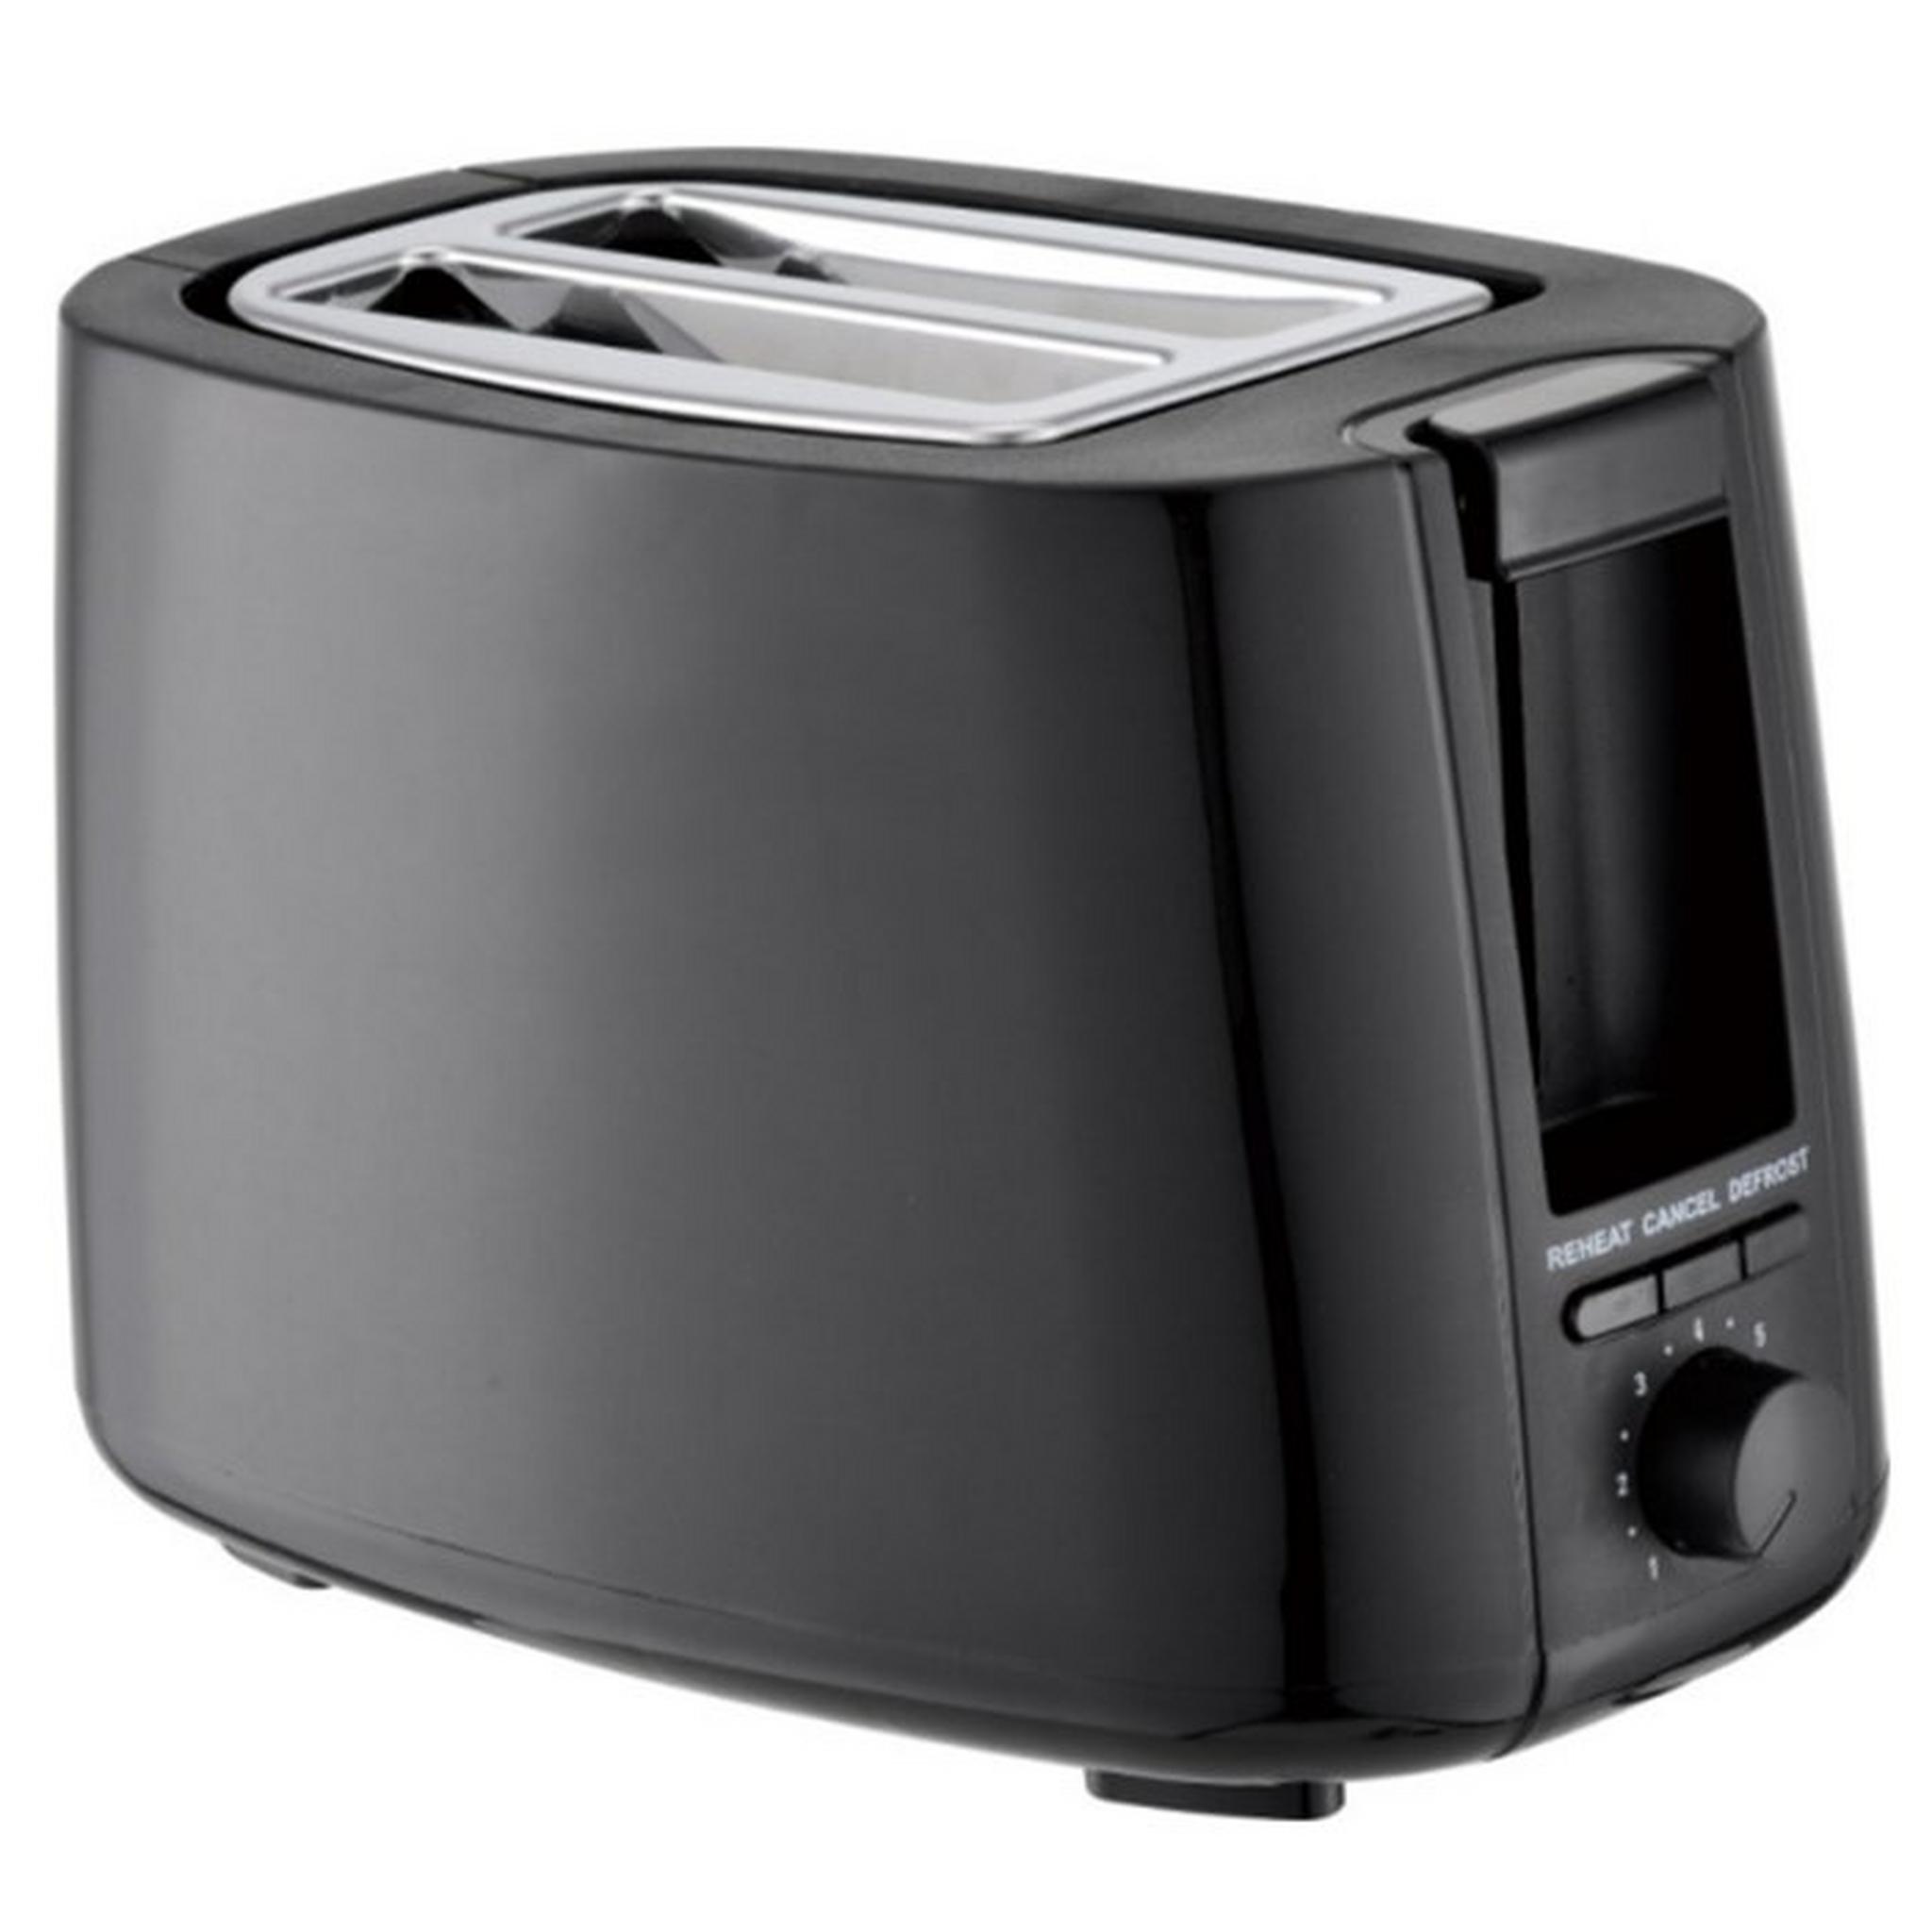 Princess 750W Toaster, 2 Slots, 01.142001.04.001 – Black